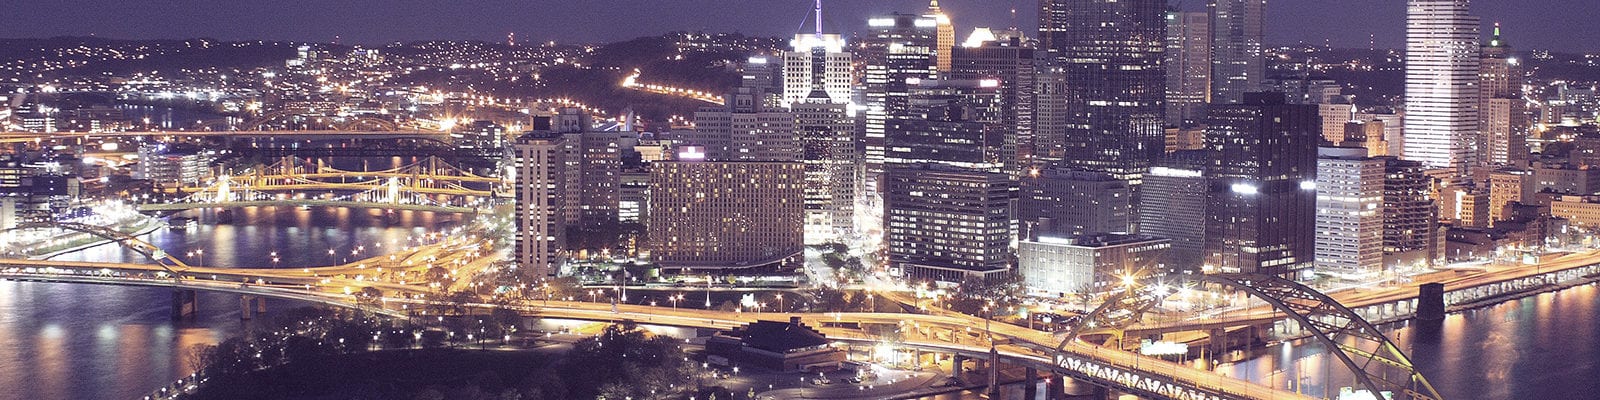 Nighttime view of Pittsburgh, Pennsylvania.